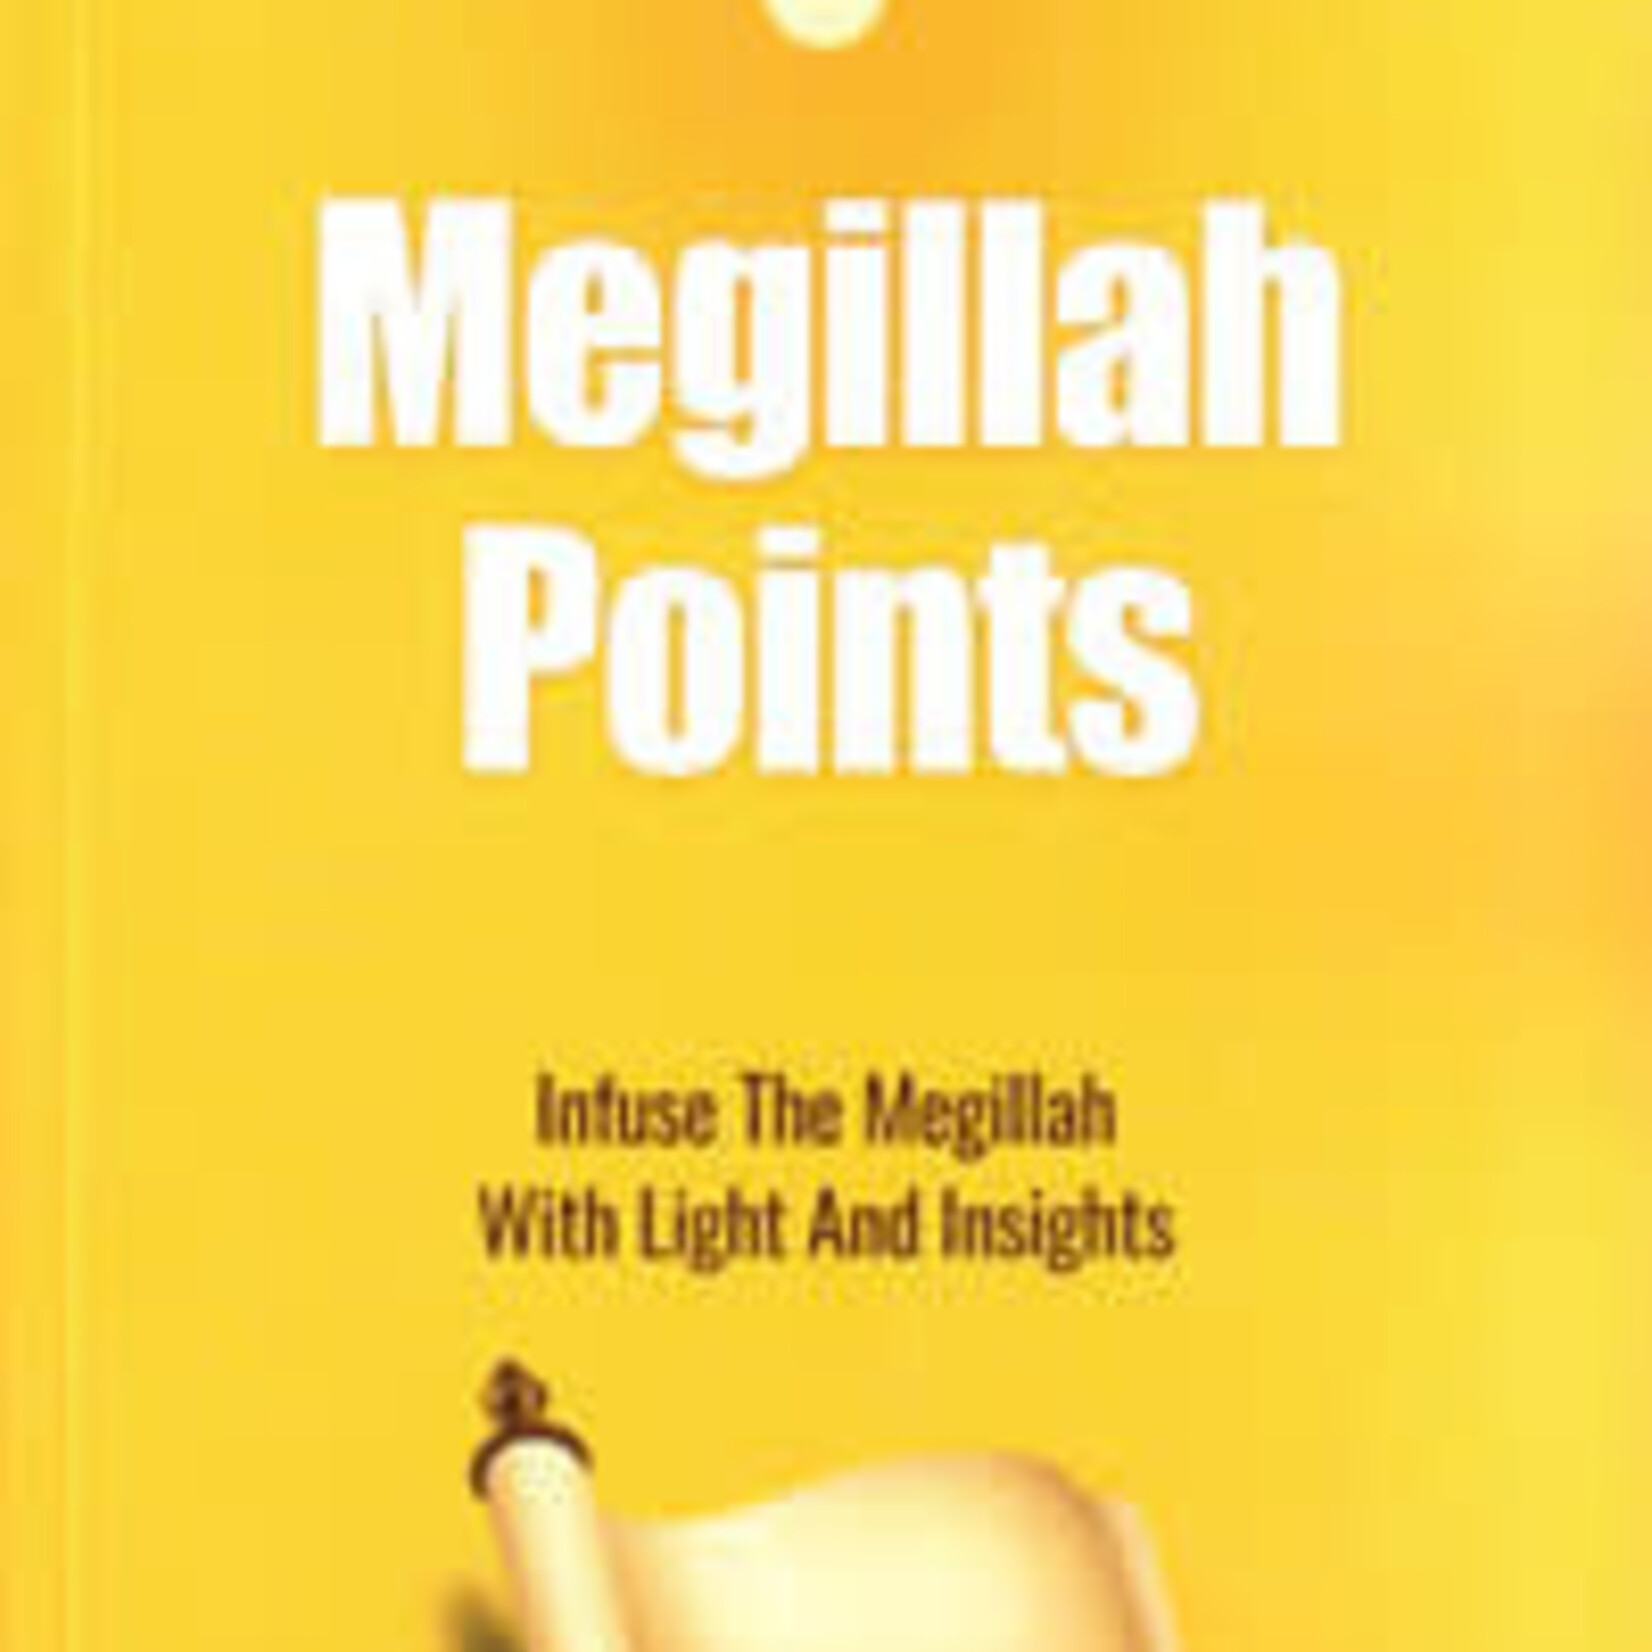 Megila Points